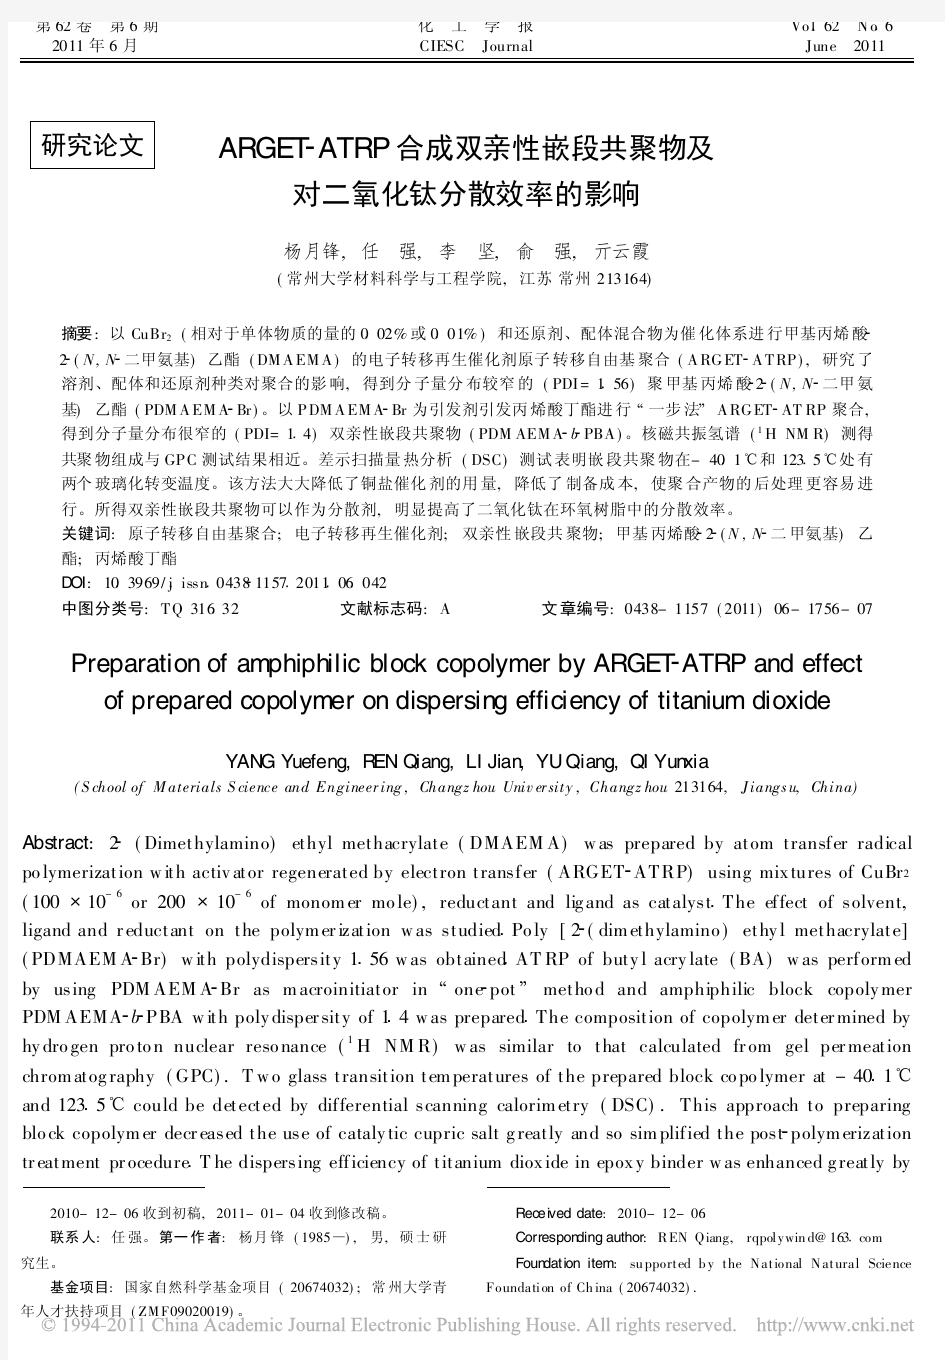 ARGET_ATRP合成双亲性嵌段共聚物及对二氧化钛分散效率的影响